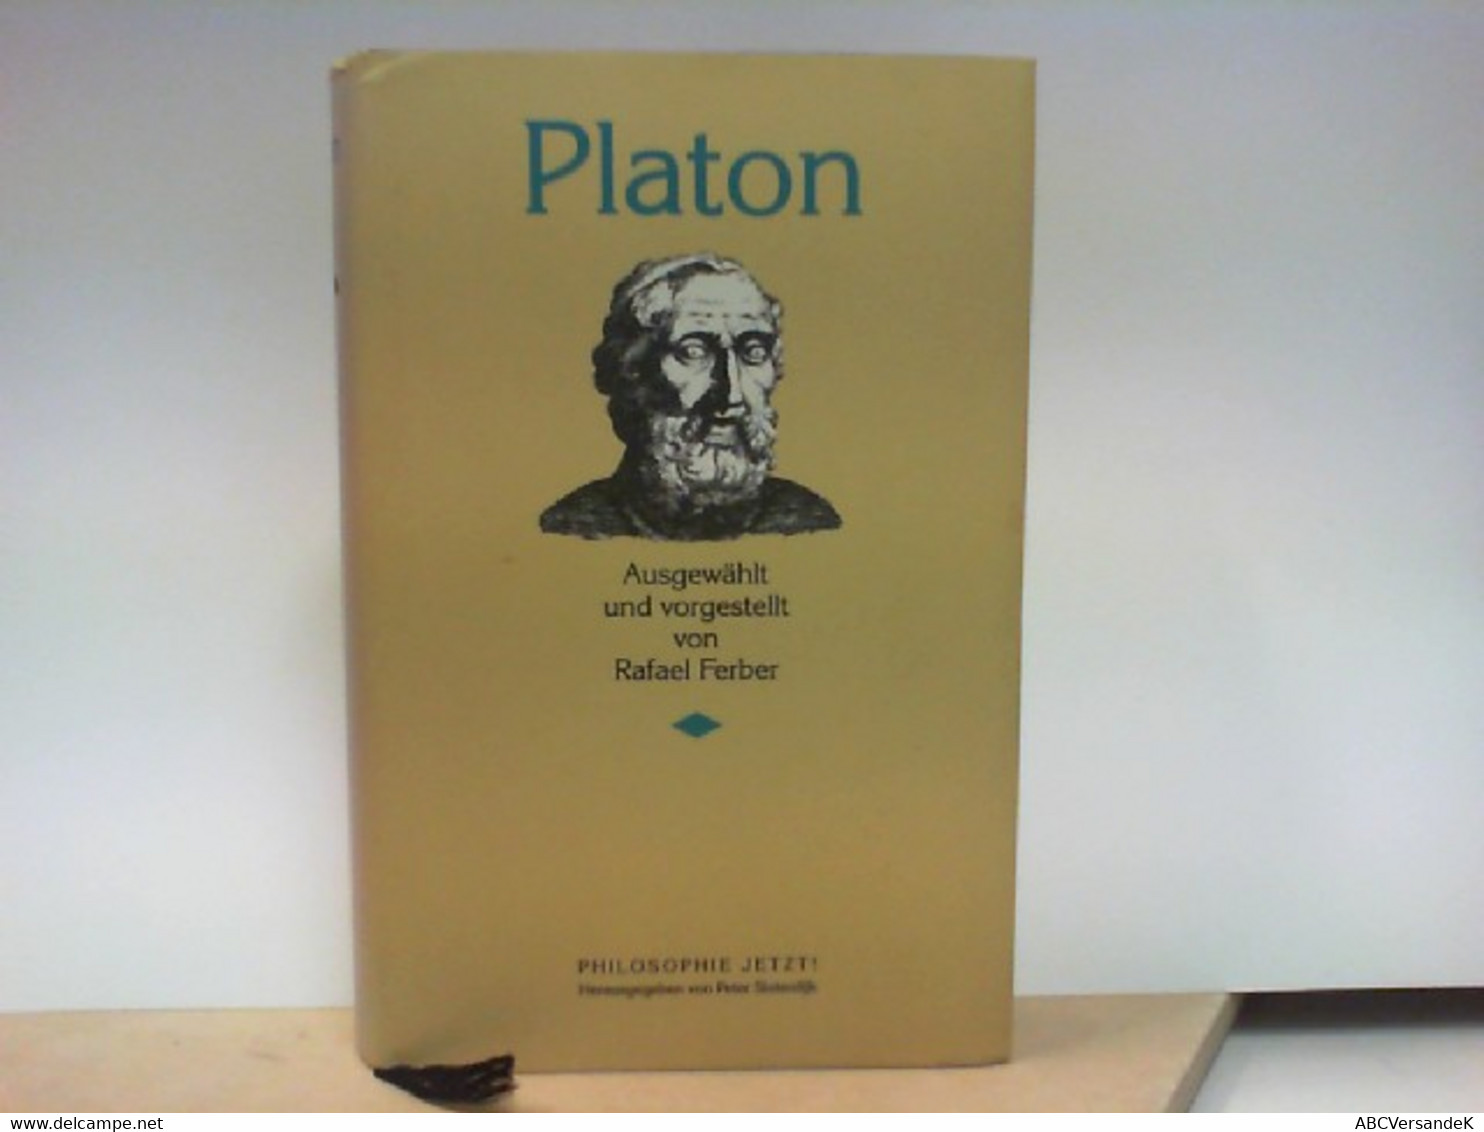 Platon - Philosophy